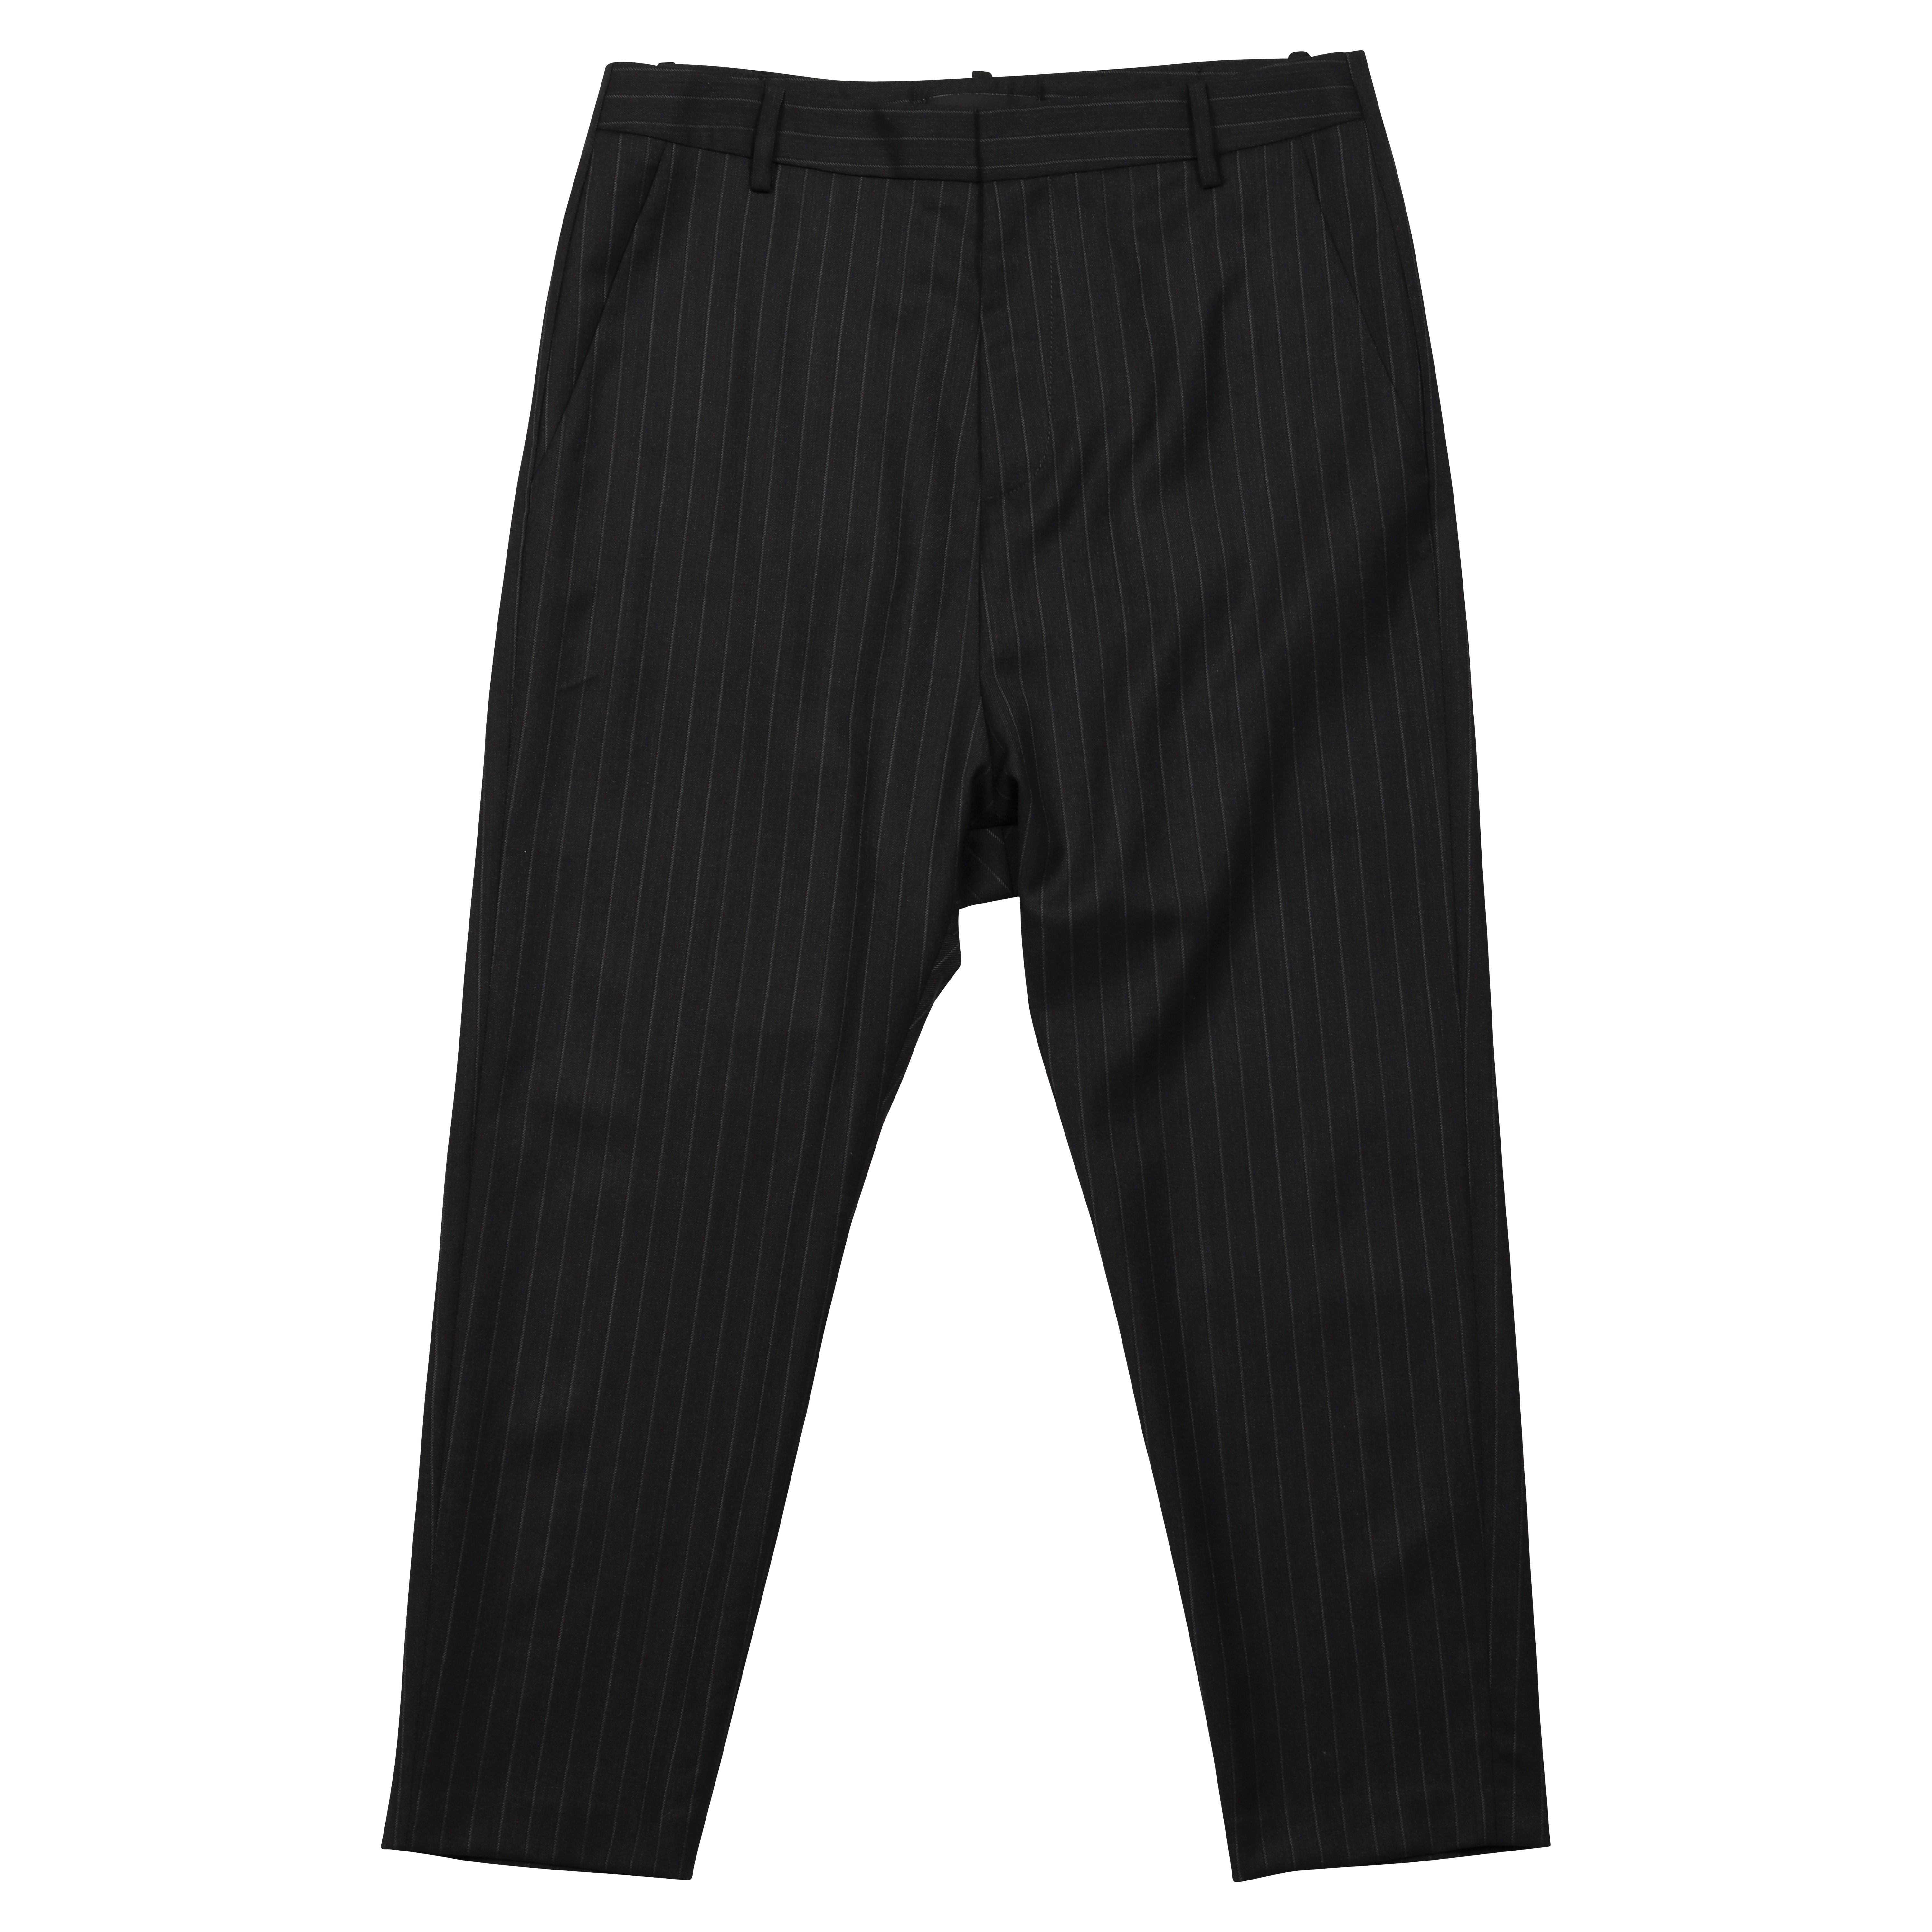 Nili Lotan Paris Wool Pant Charcoal Striped 10/XXL